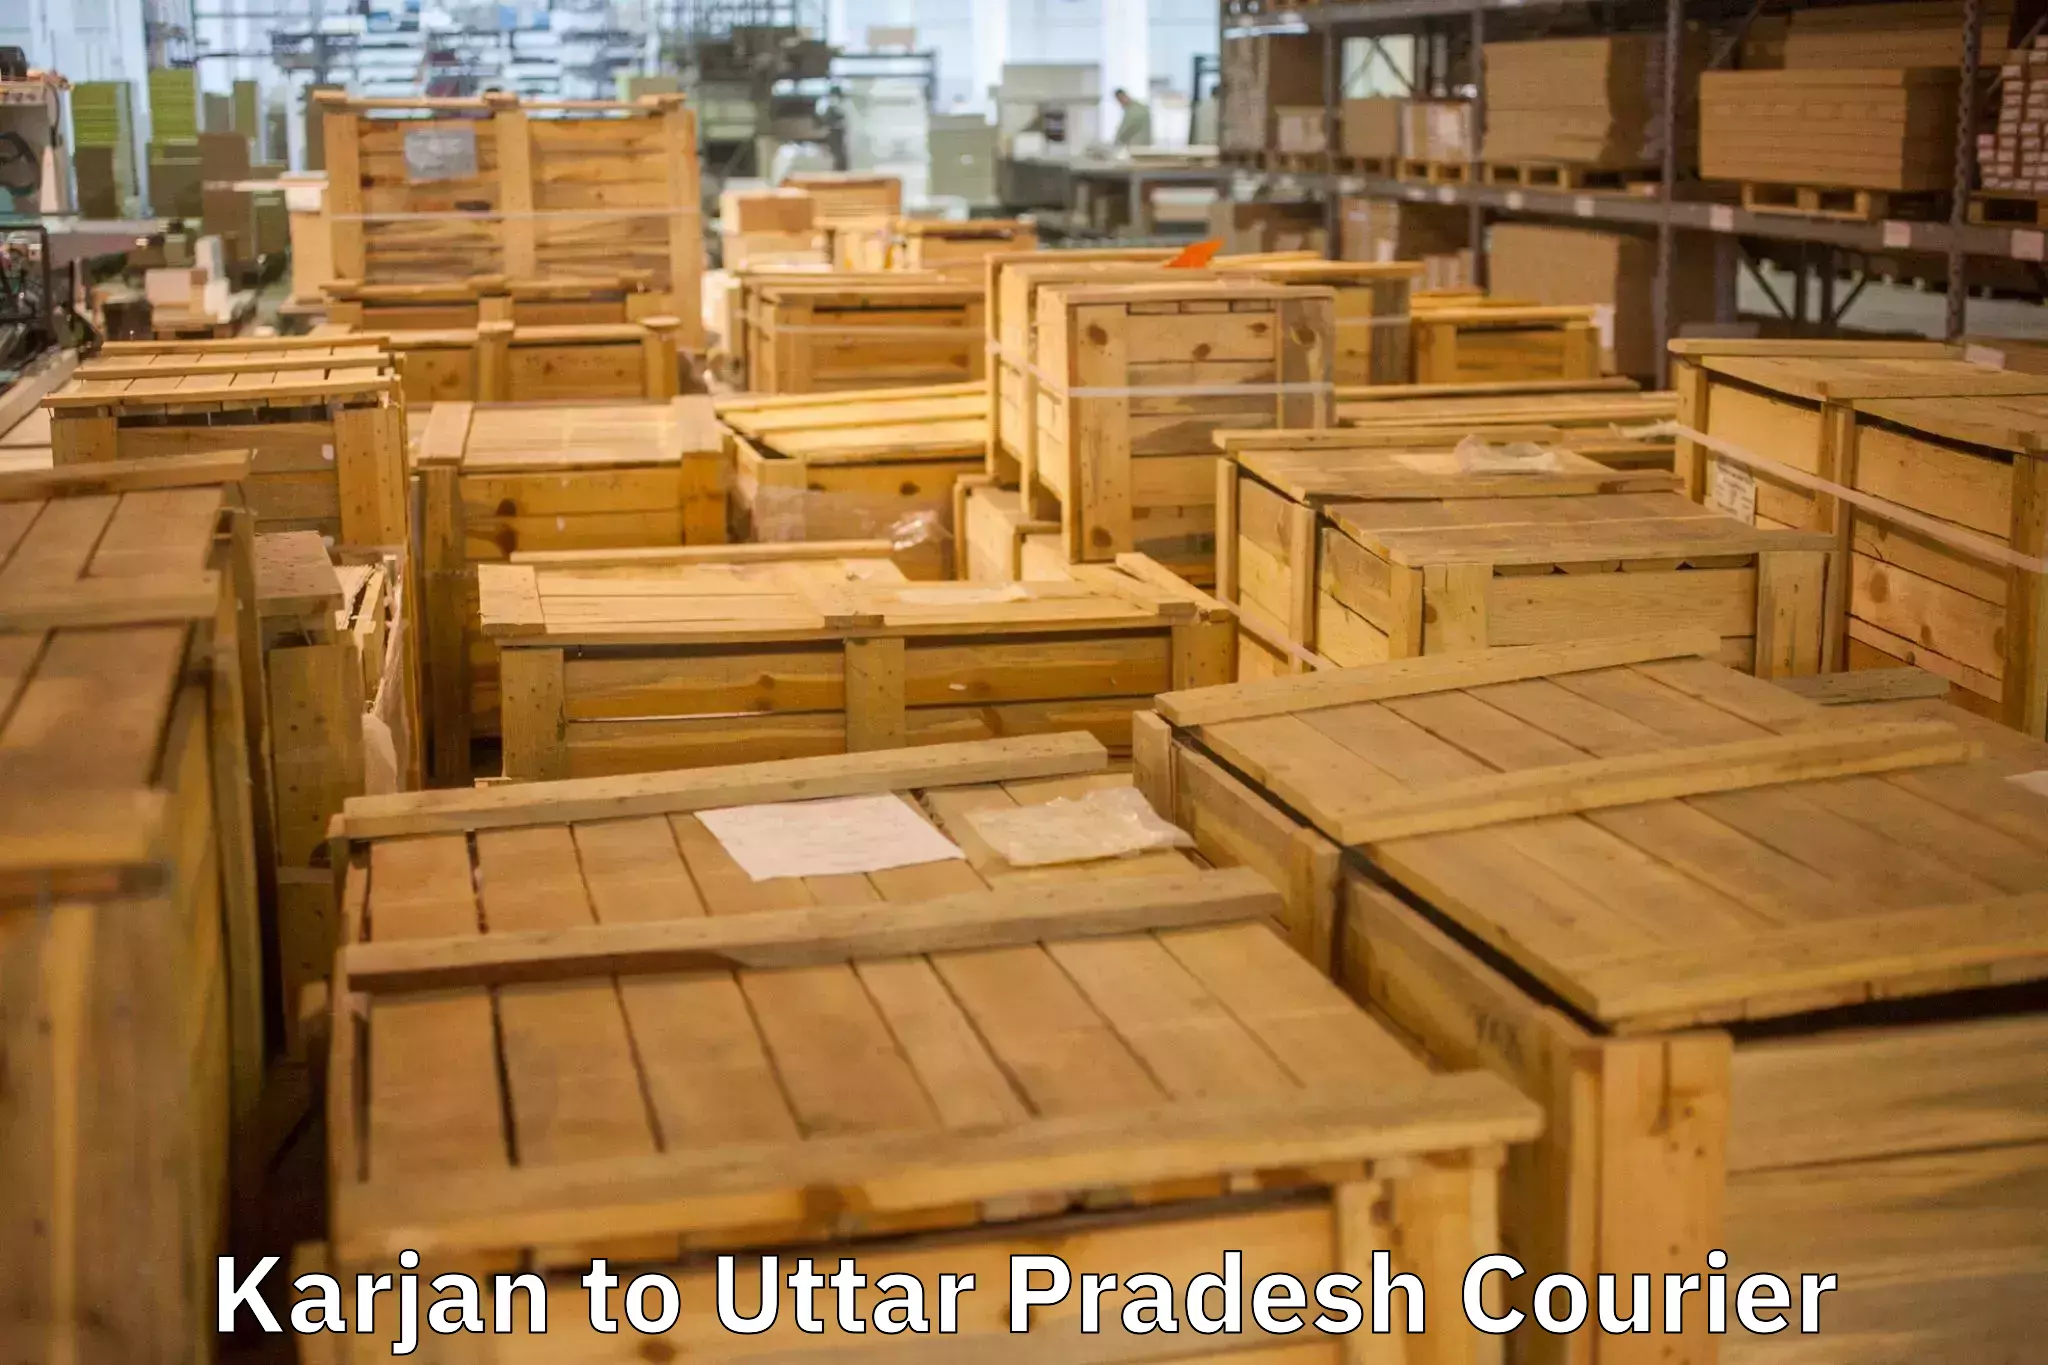 Professional moving company Karjan to Prayagraj